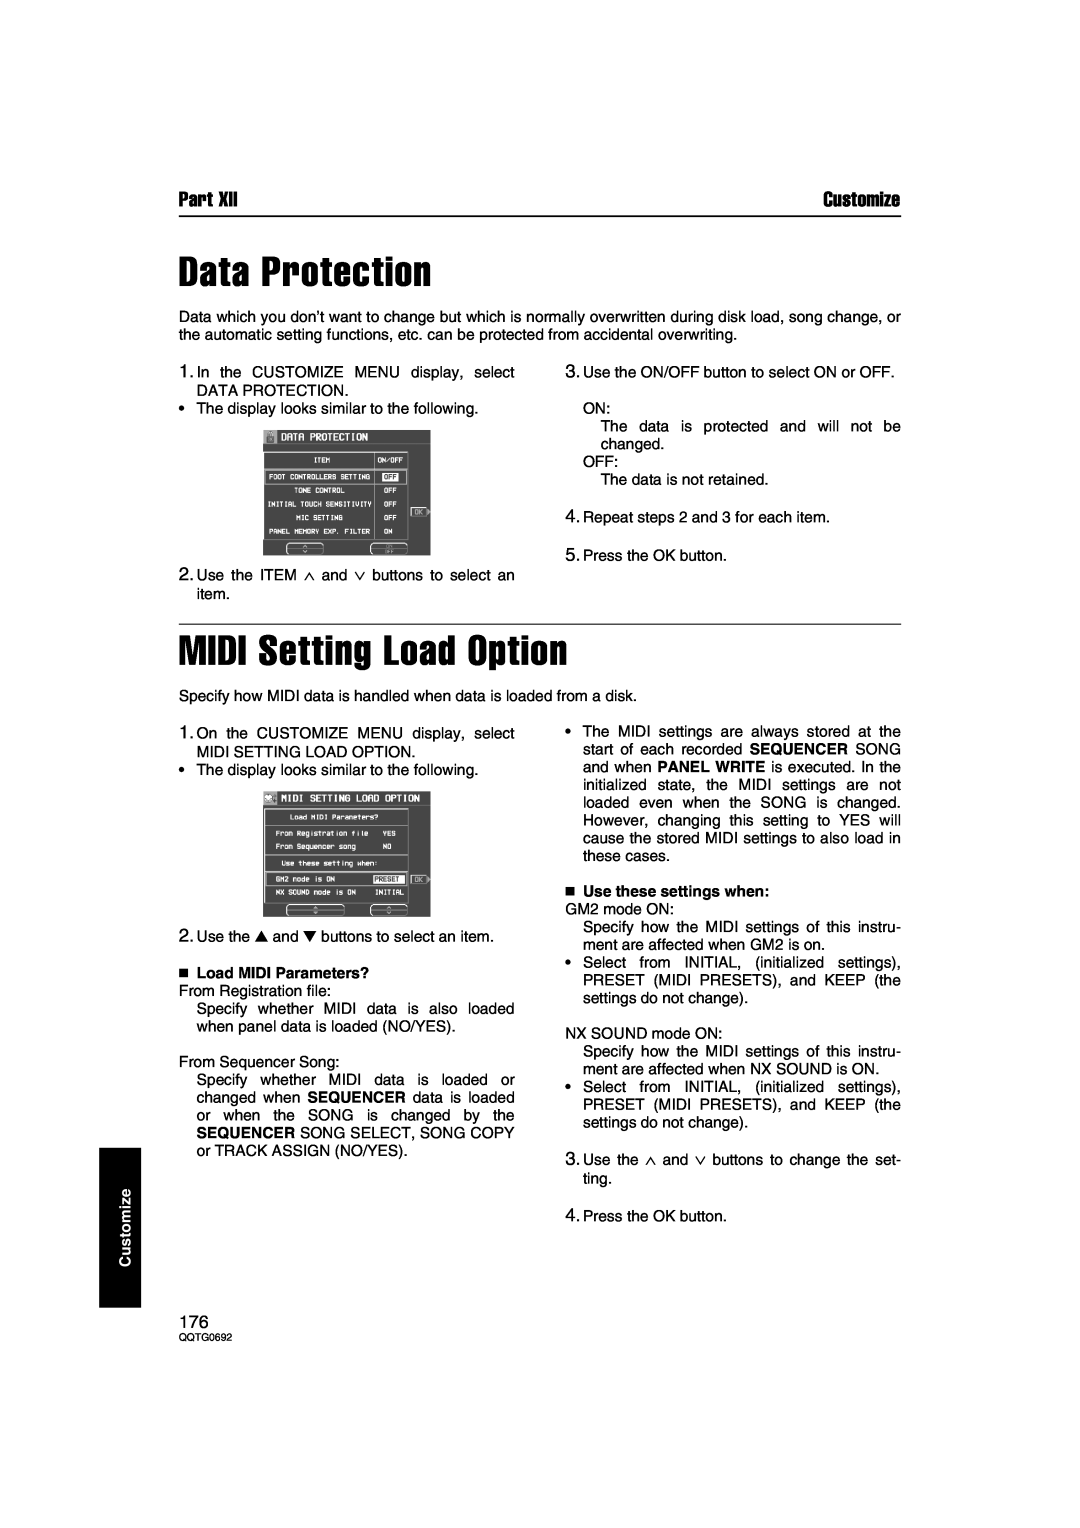 Panasonic SX-KN2600 manual Data Protection, MIDI Setting Load Option, Use these settings when GM2 mode ON, Part, Customize 